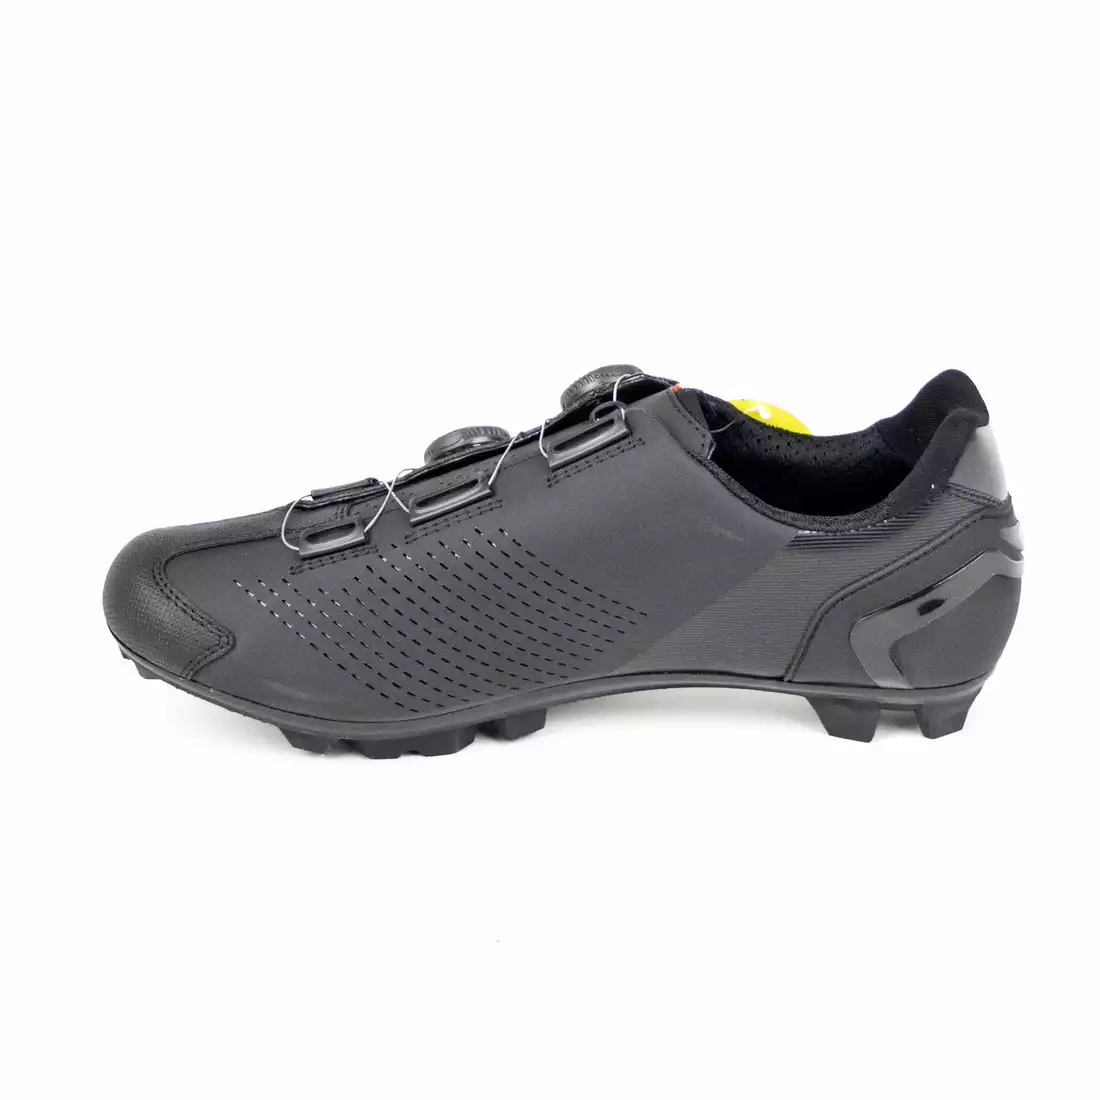 CRONO CX-2-22 Cycling shoes MTB, composite, black